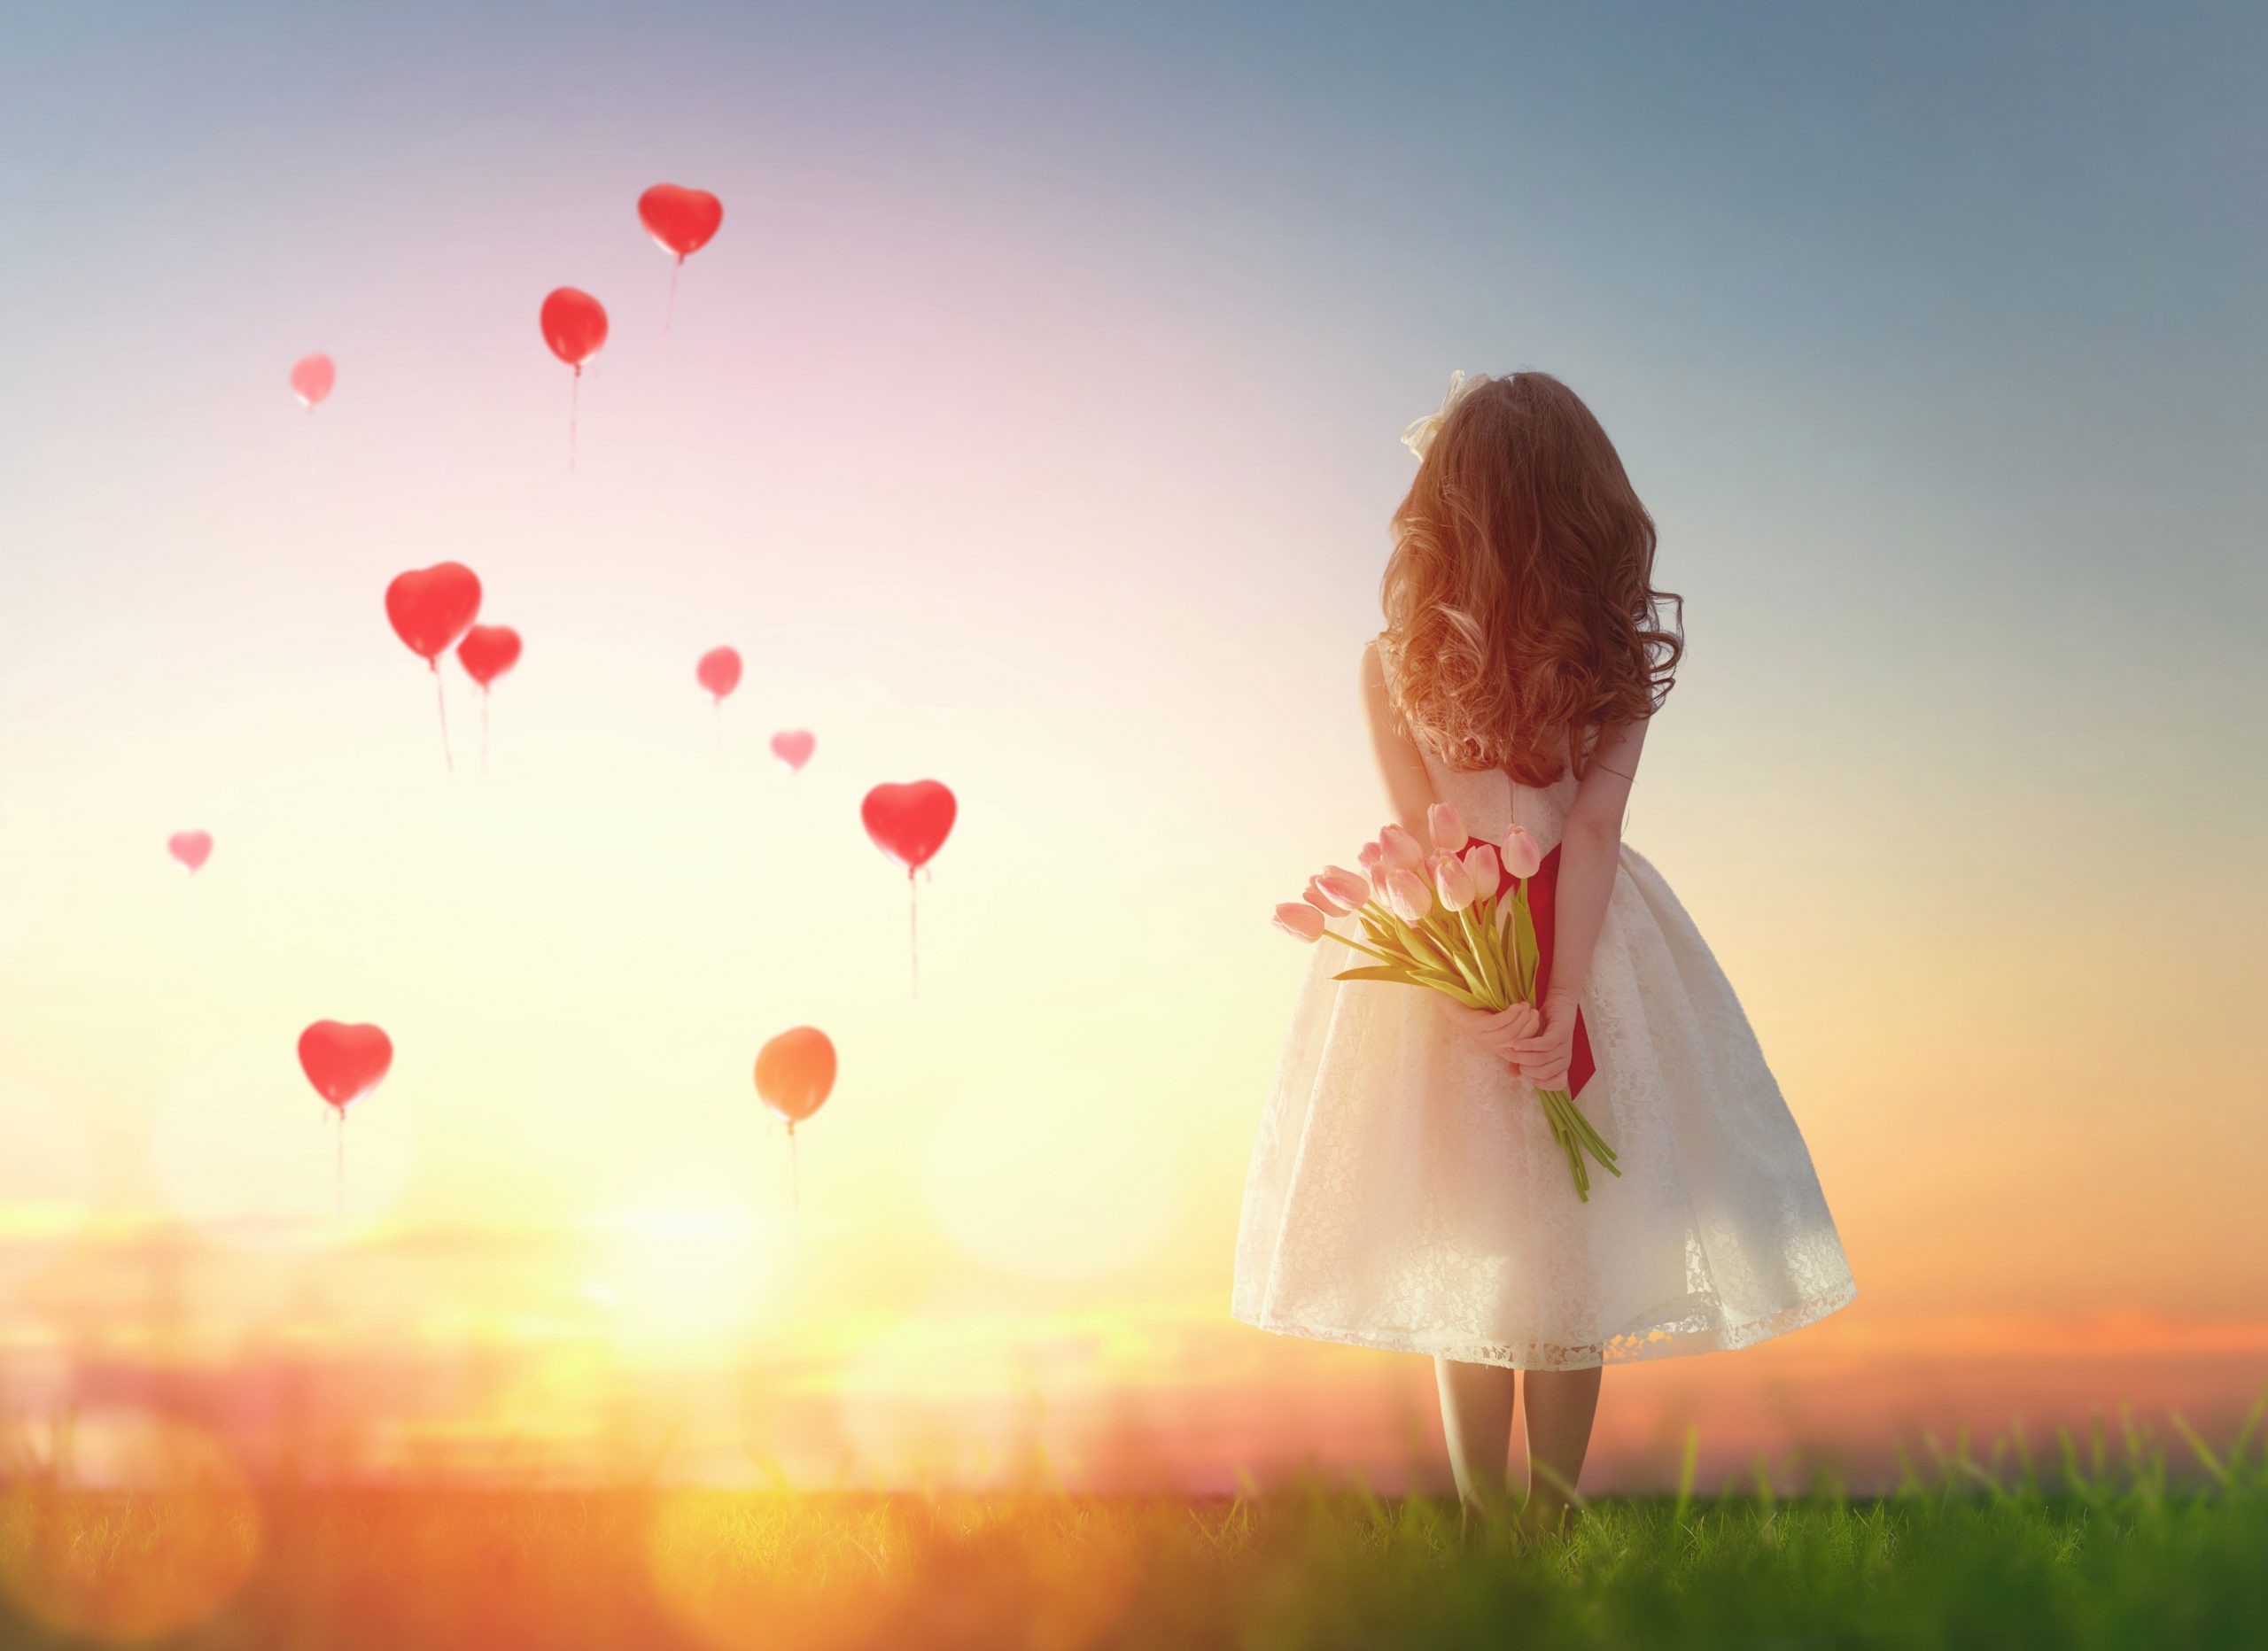 Pink tulips wallpaper, love, sunset, heart, girl, romantic, balloon, childhood